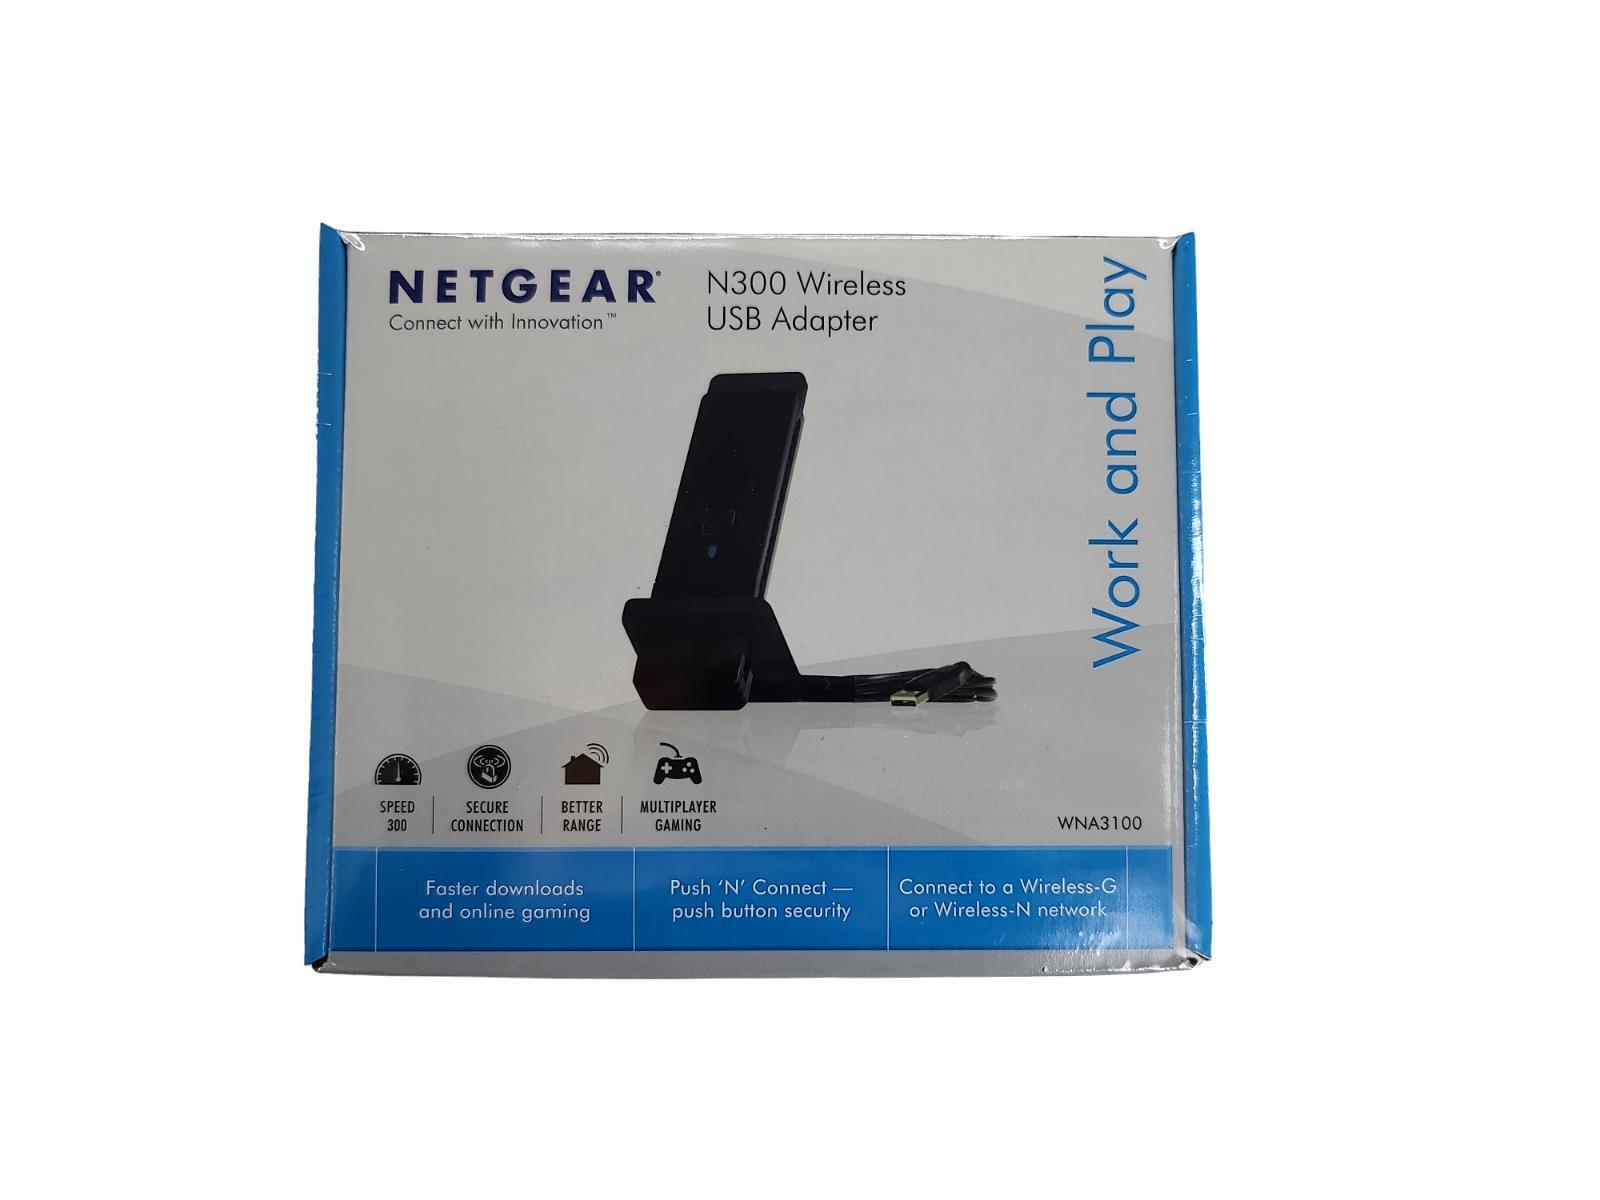 NETGEAR N300 Wireless Wi-Fi Receiver USB Adapter WNA3100 New